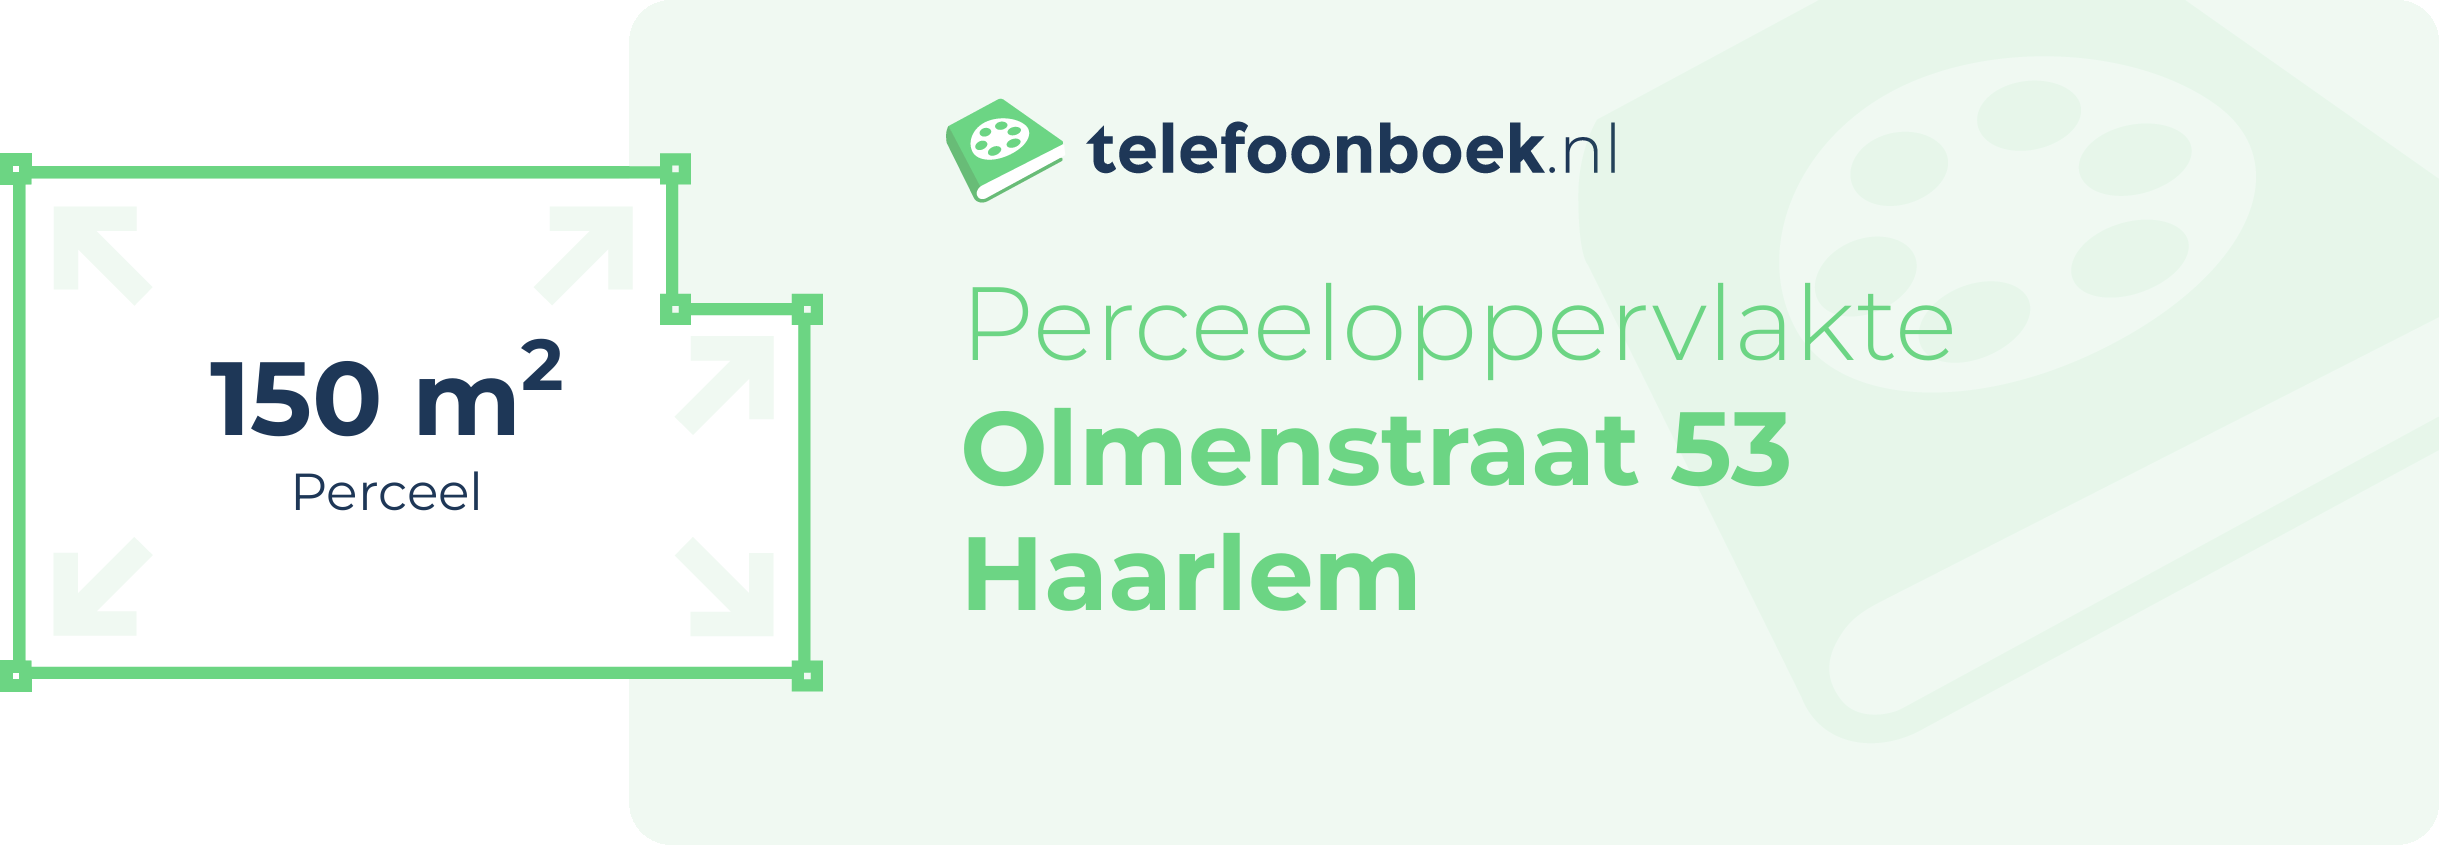 Perceeloppervlakte Olmenstraat 53 Haarlem